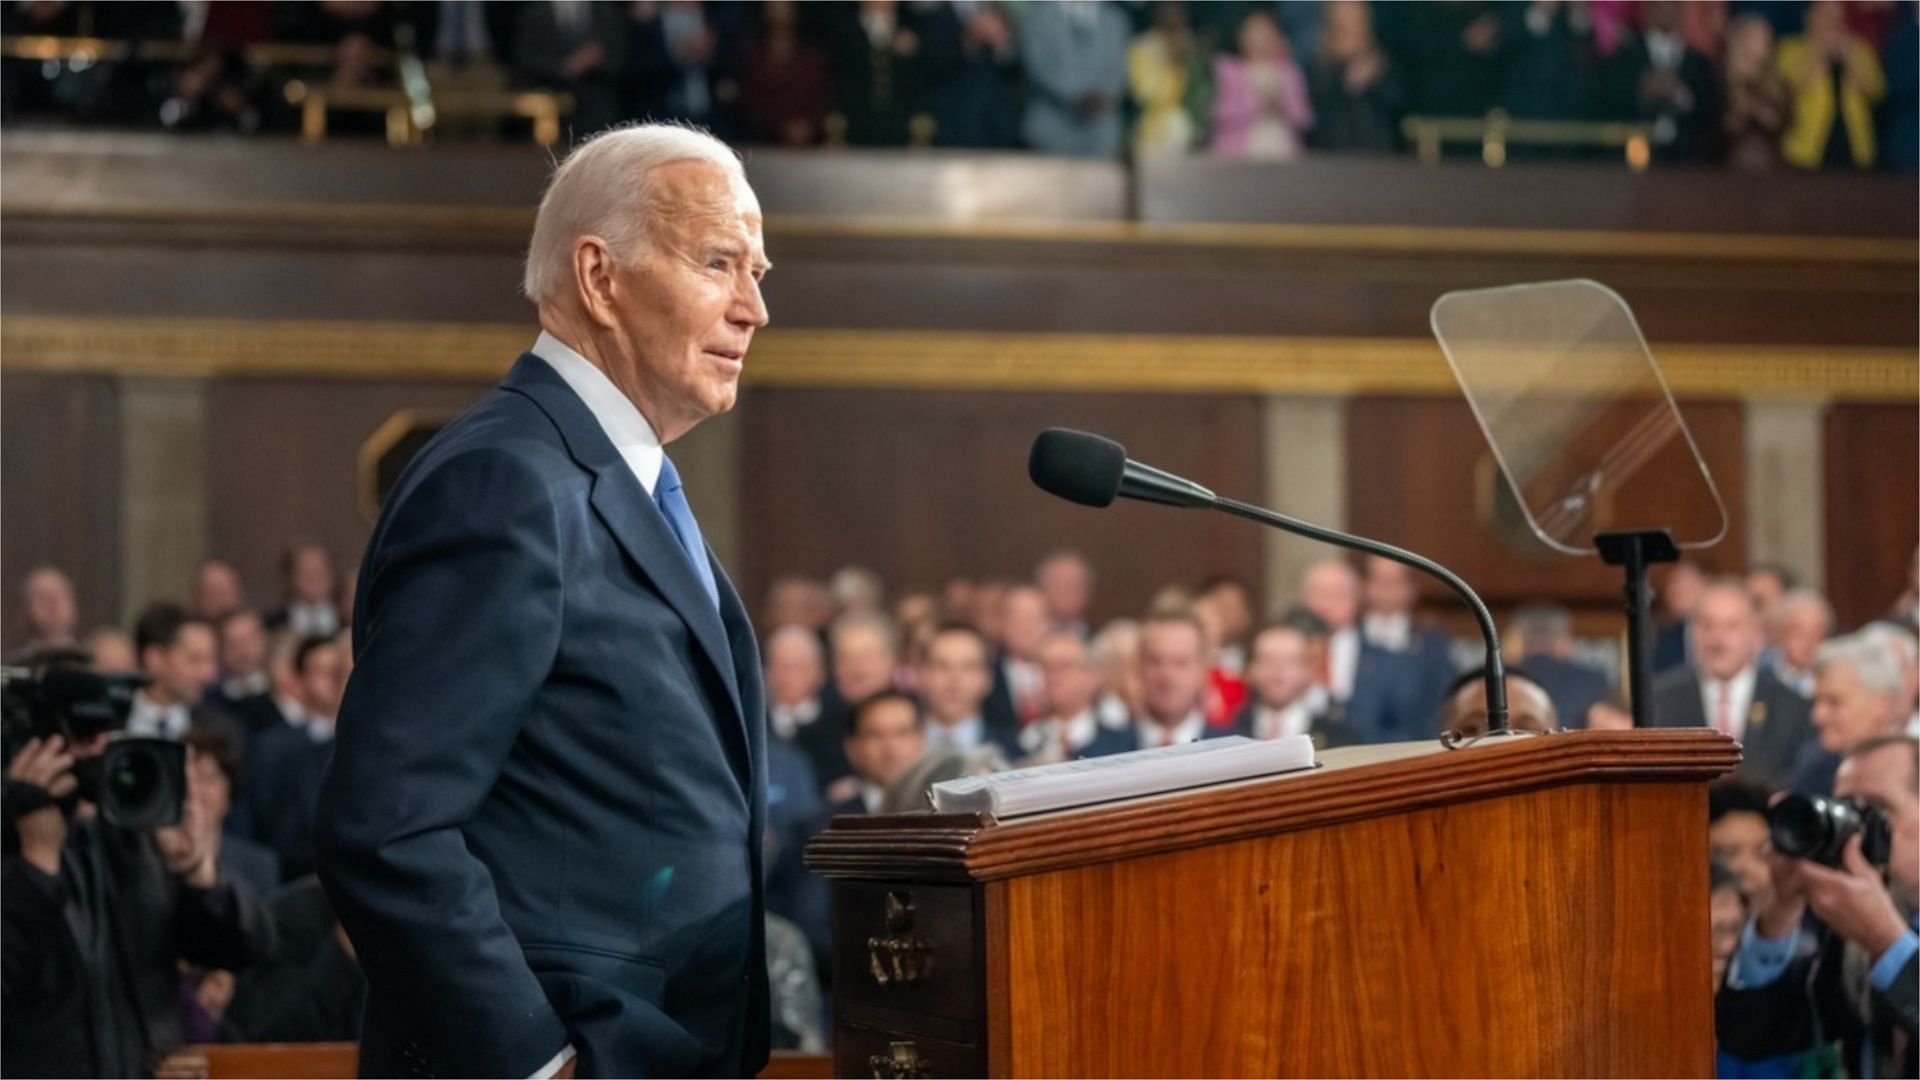 Joe Biden apologized for calling Laken Riley